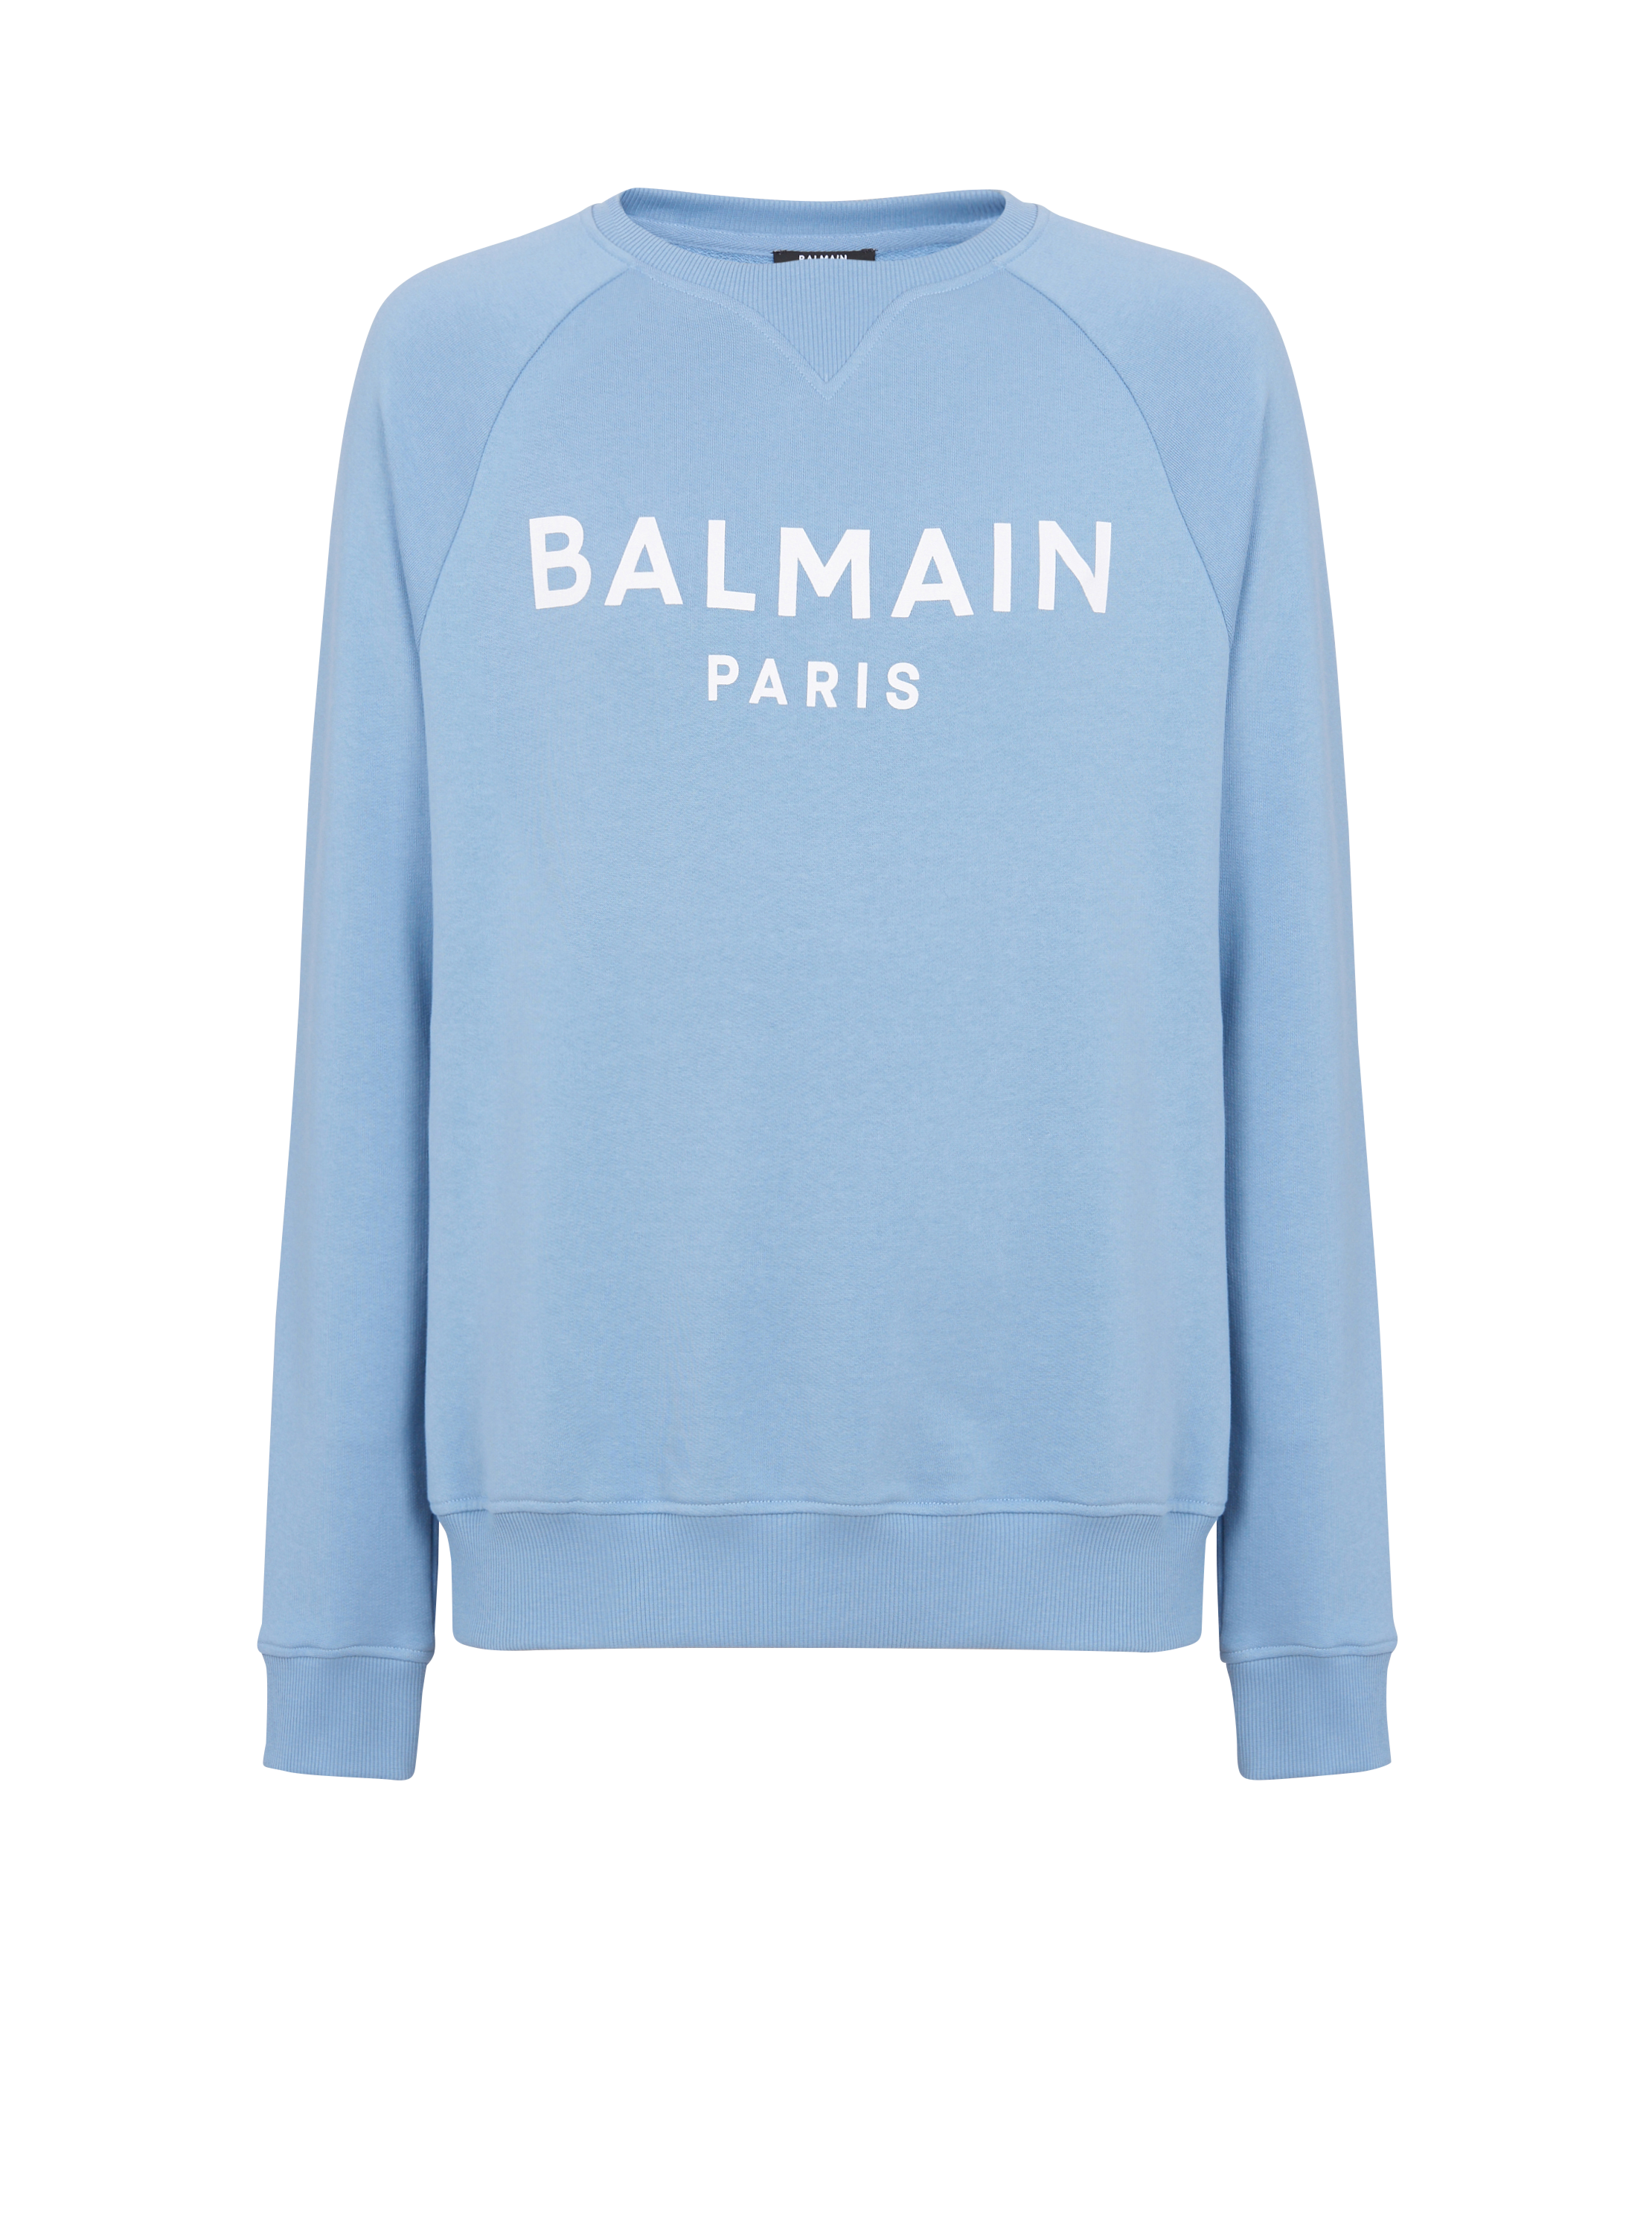 Balmain Paris sweatshirt, blue, hi-res